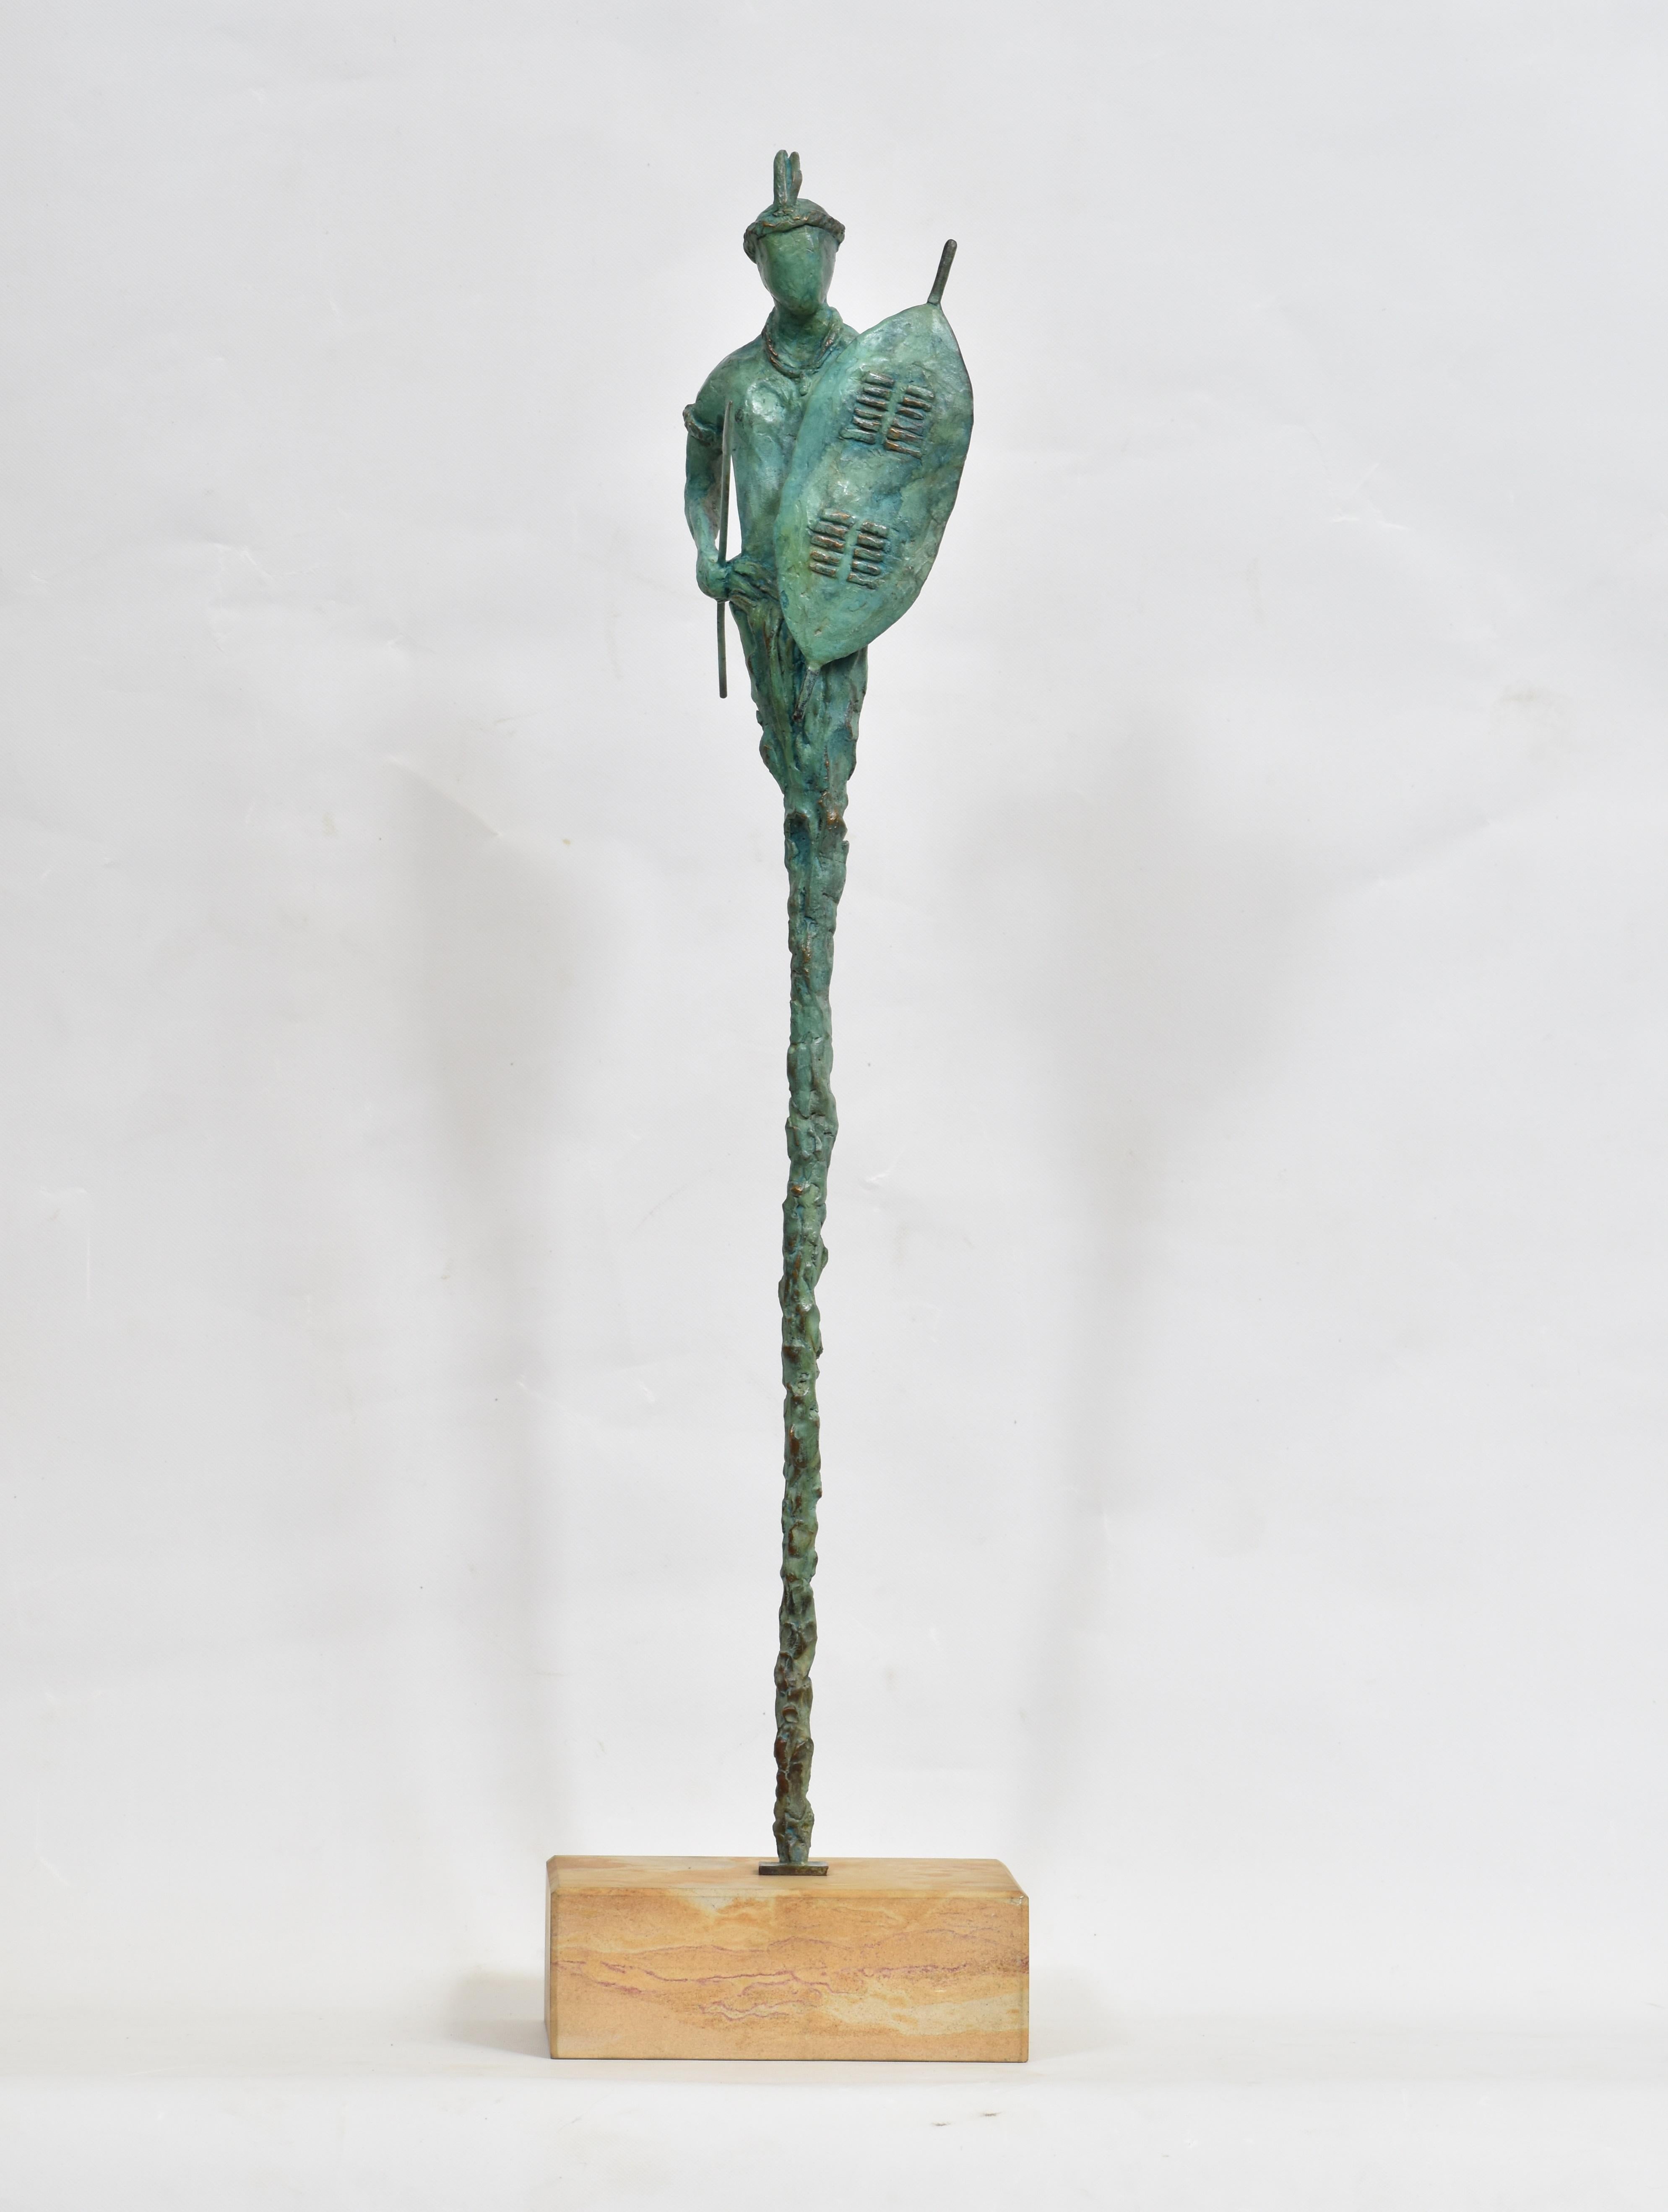 Zulu Warrior - African Sculpture in Bronze Verdigris - Limited Edition - Gold Abstract Sculpture by Heinrich Filter